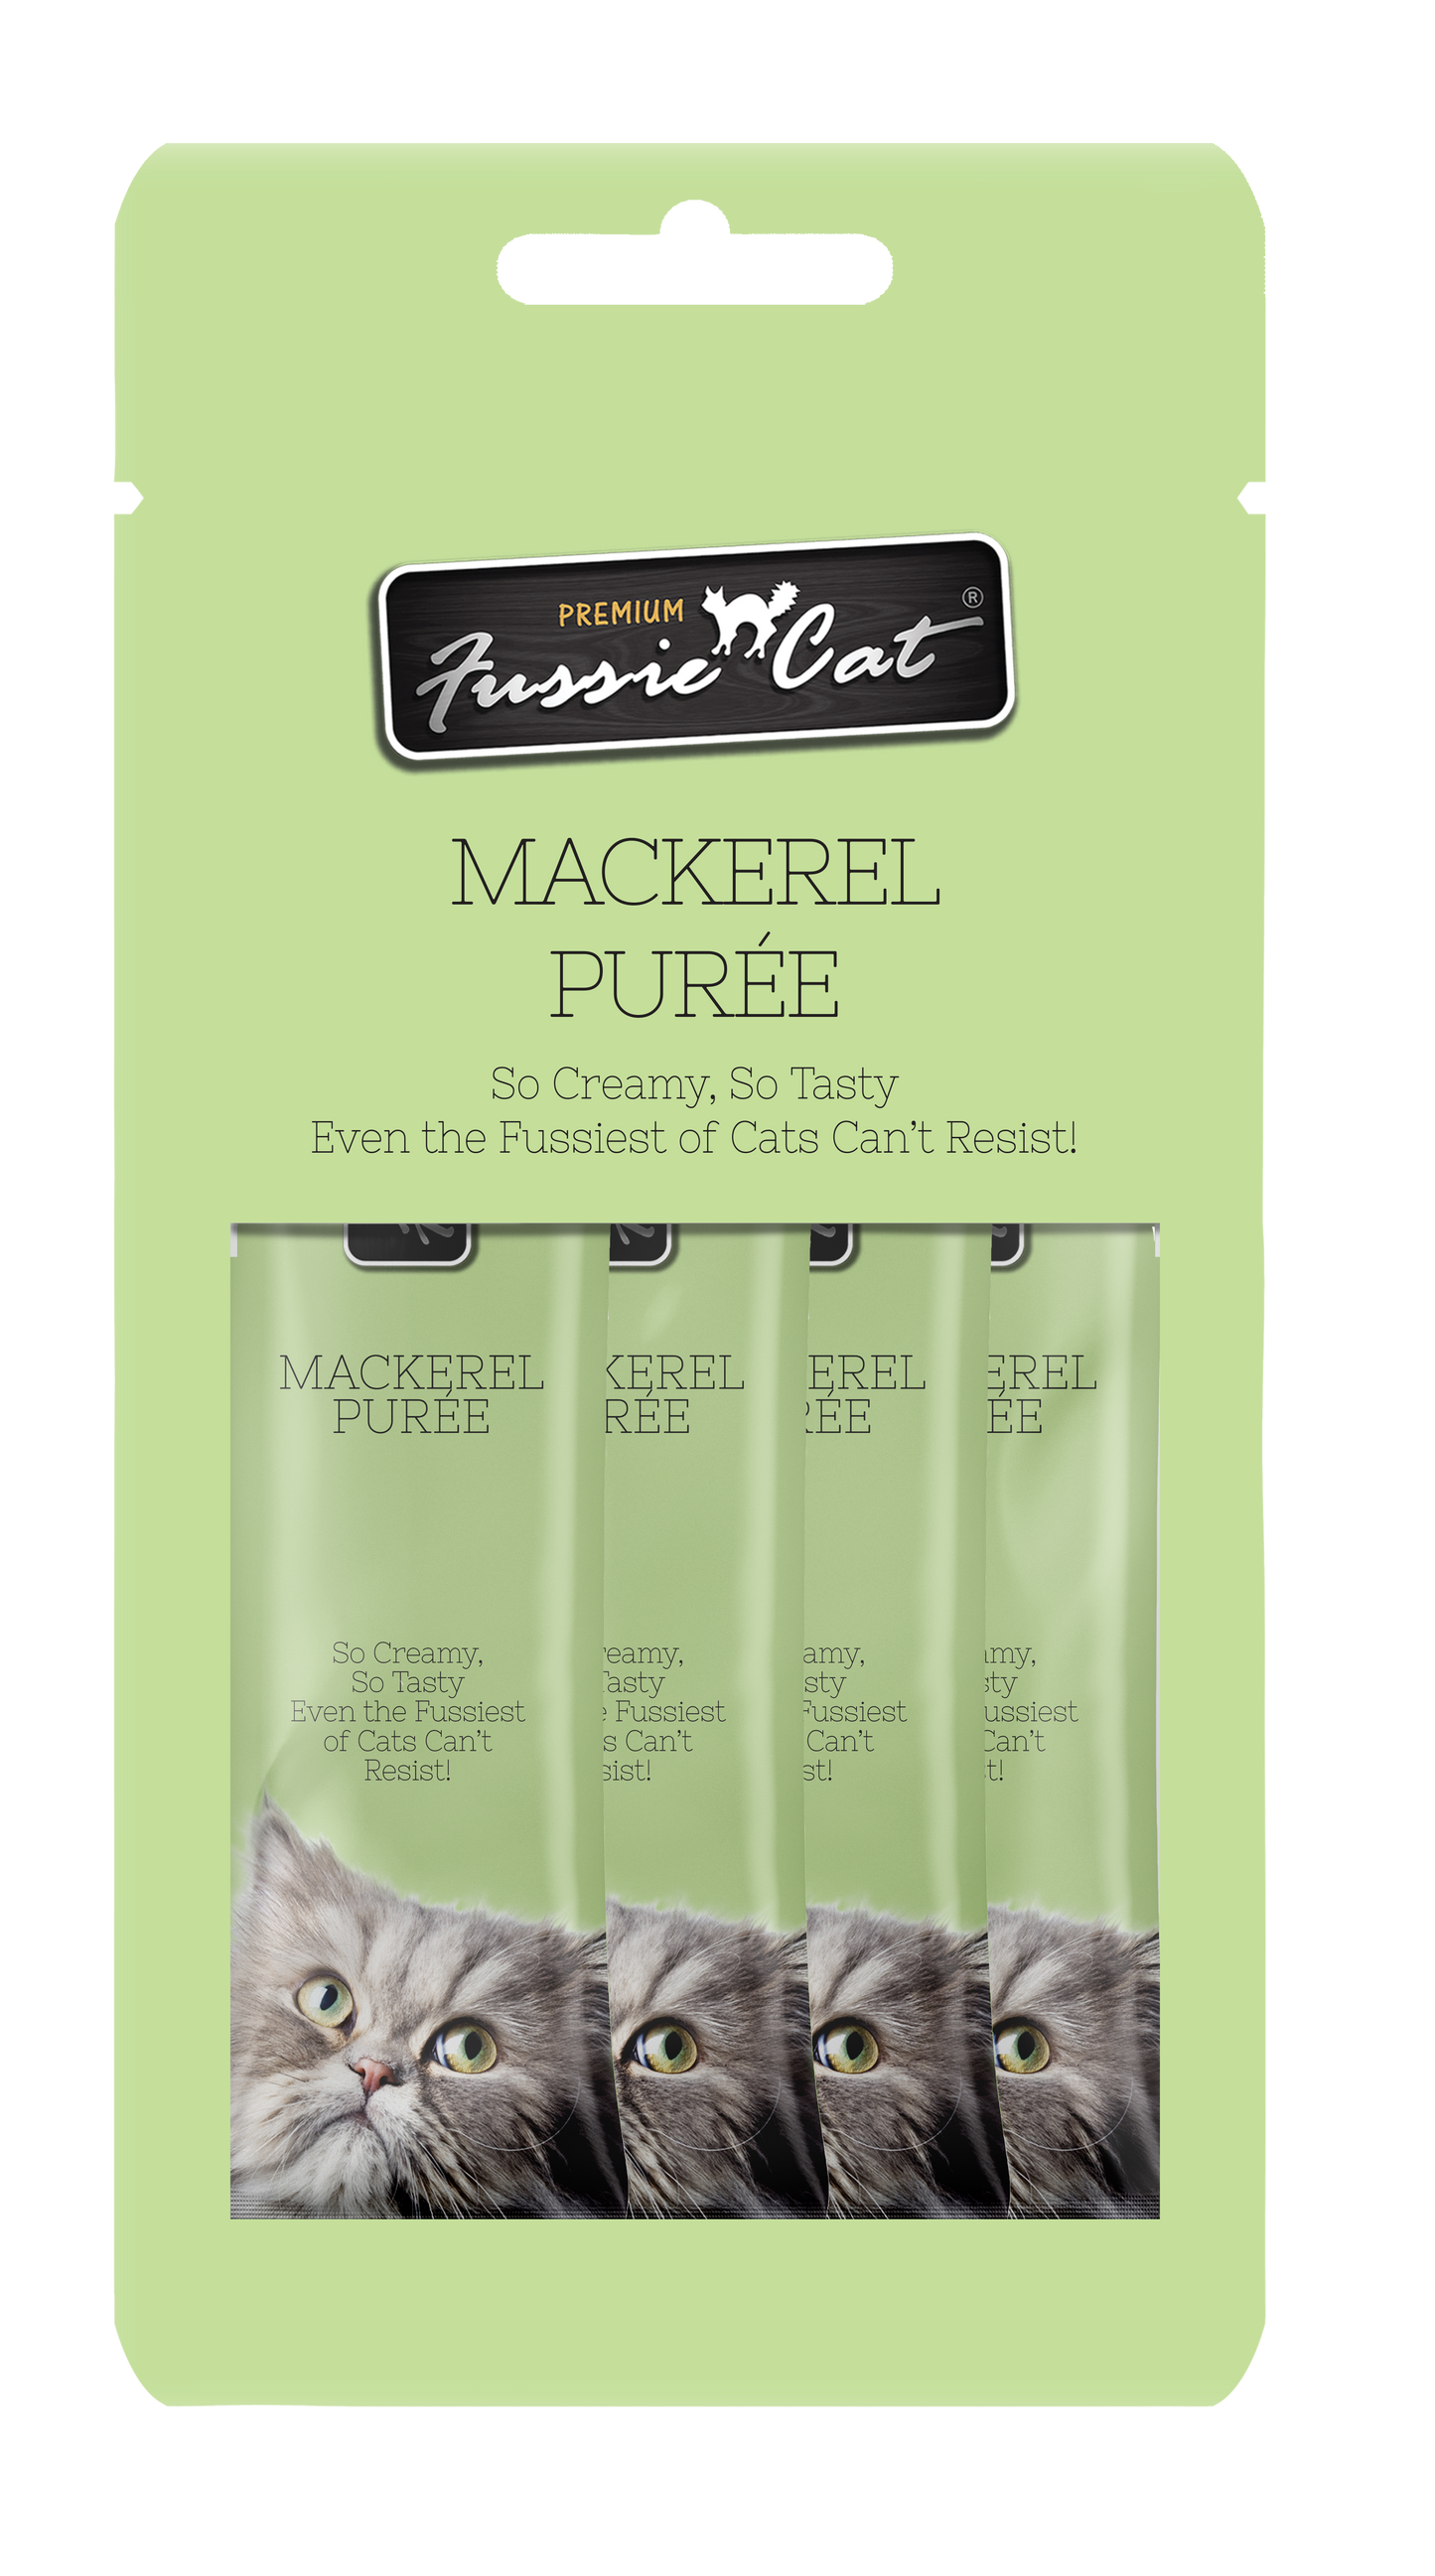 Fussie Cat Mackerel Purée 0.5-oz, 4-Pack, Cat Treat